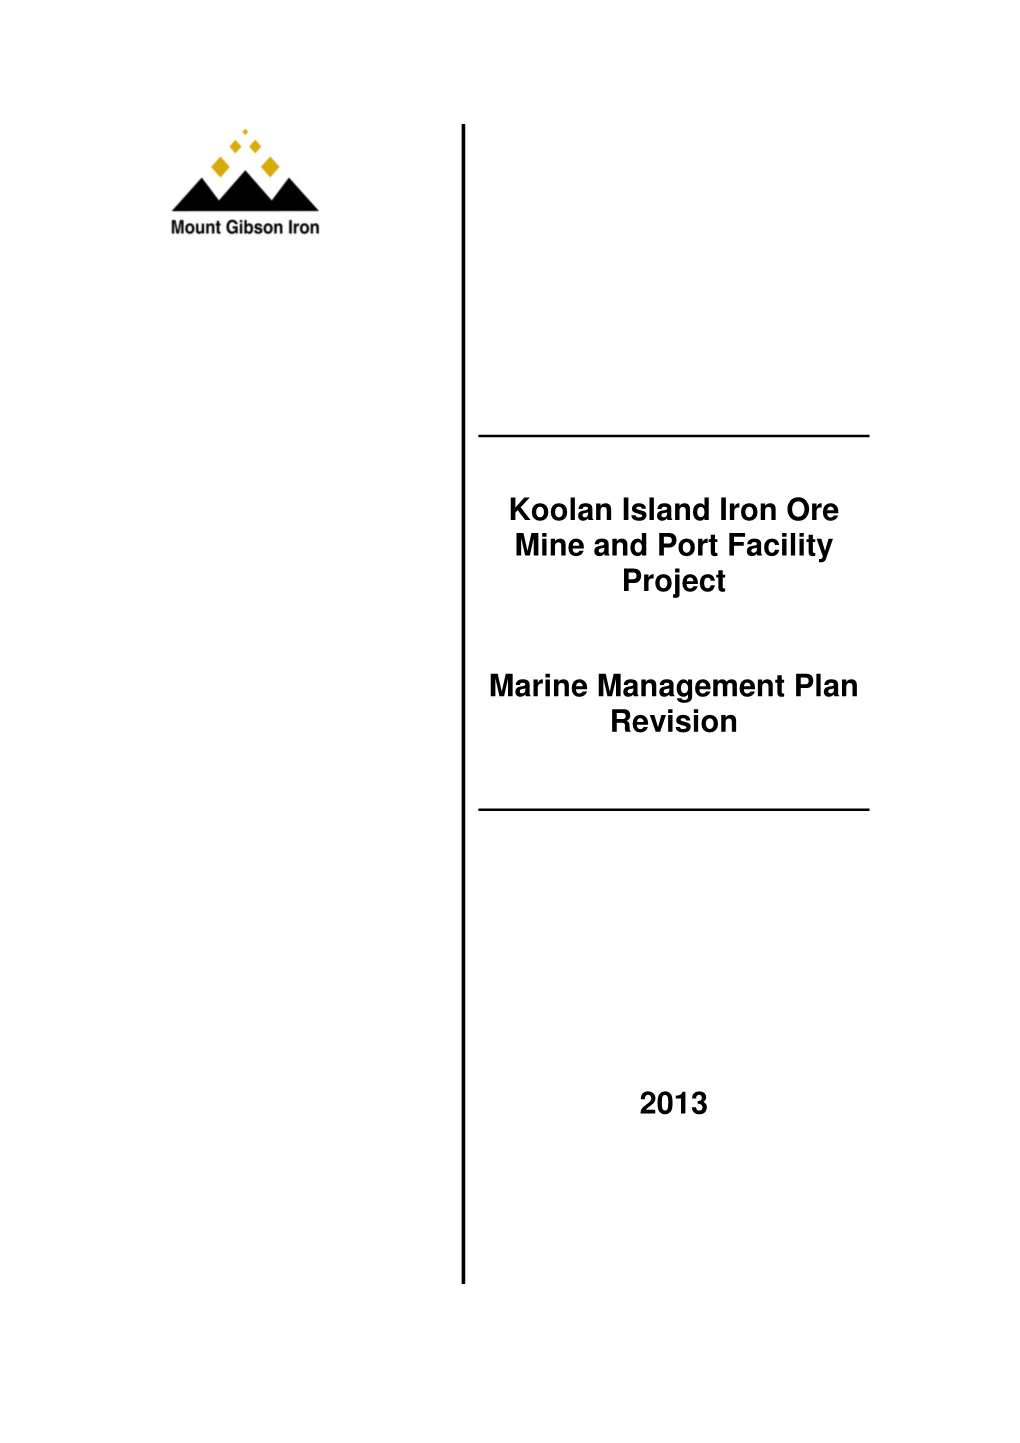 Koolan Island Iron Ore Mine and Port Facility Project Marine Management Plan Revision 2013